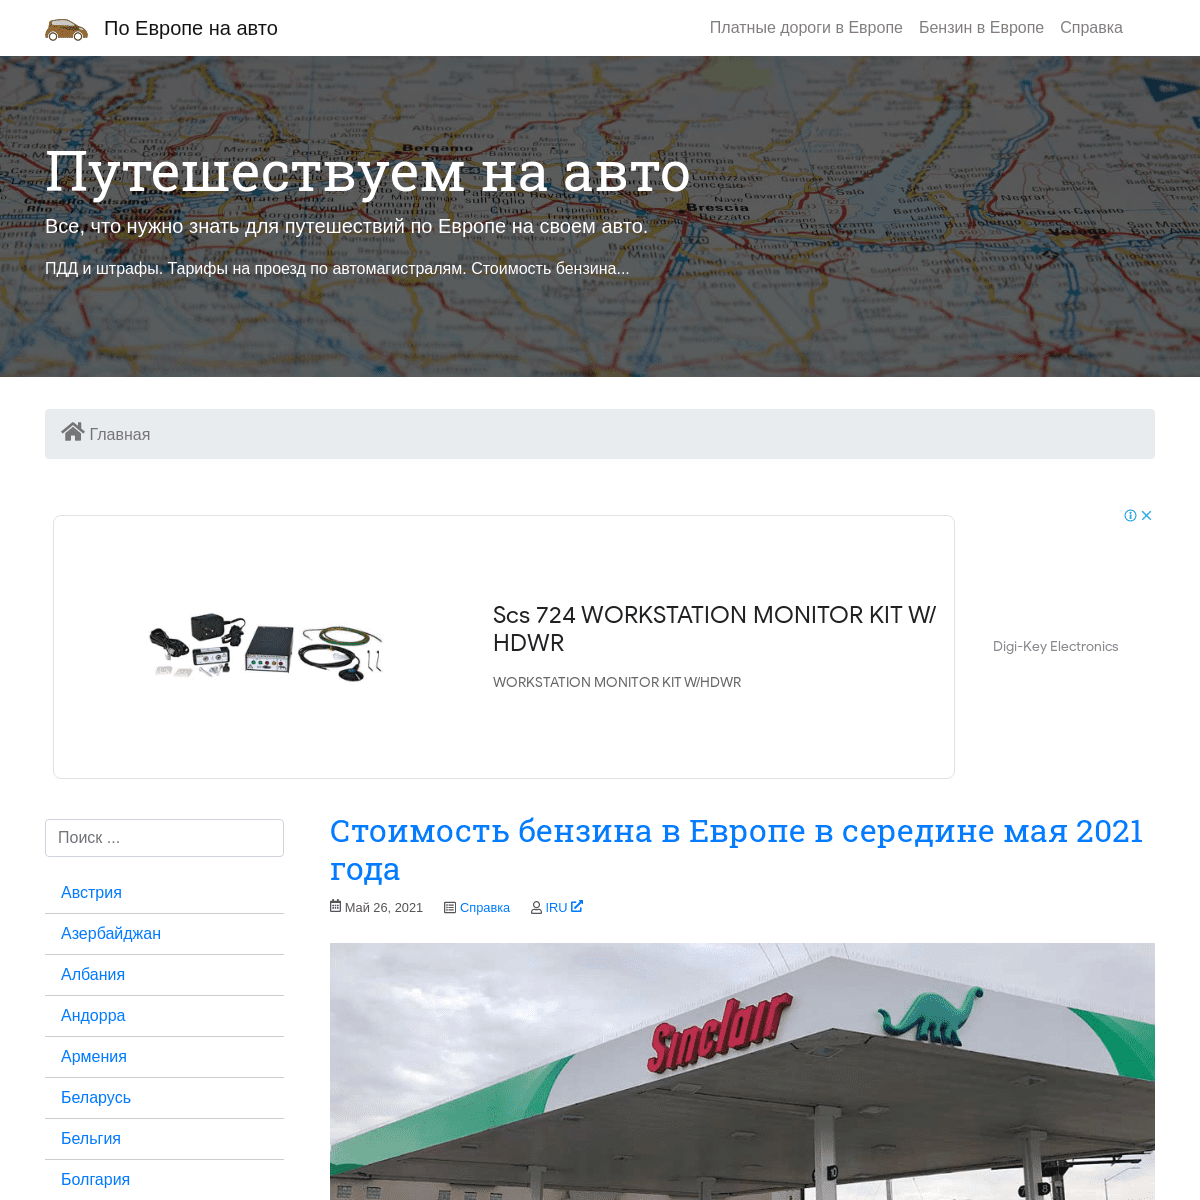 A complete backup of https://autotraveler.ru